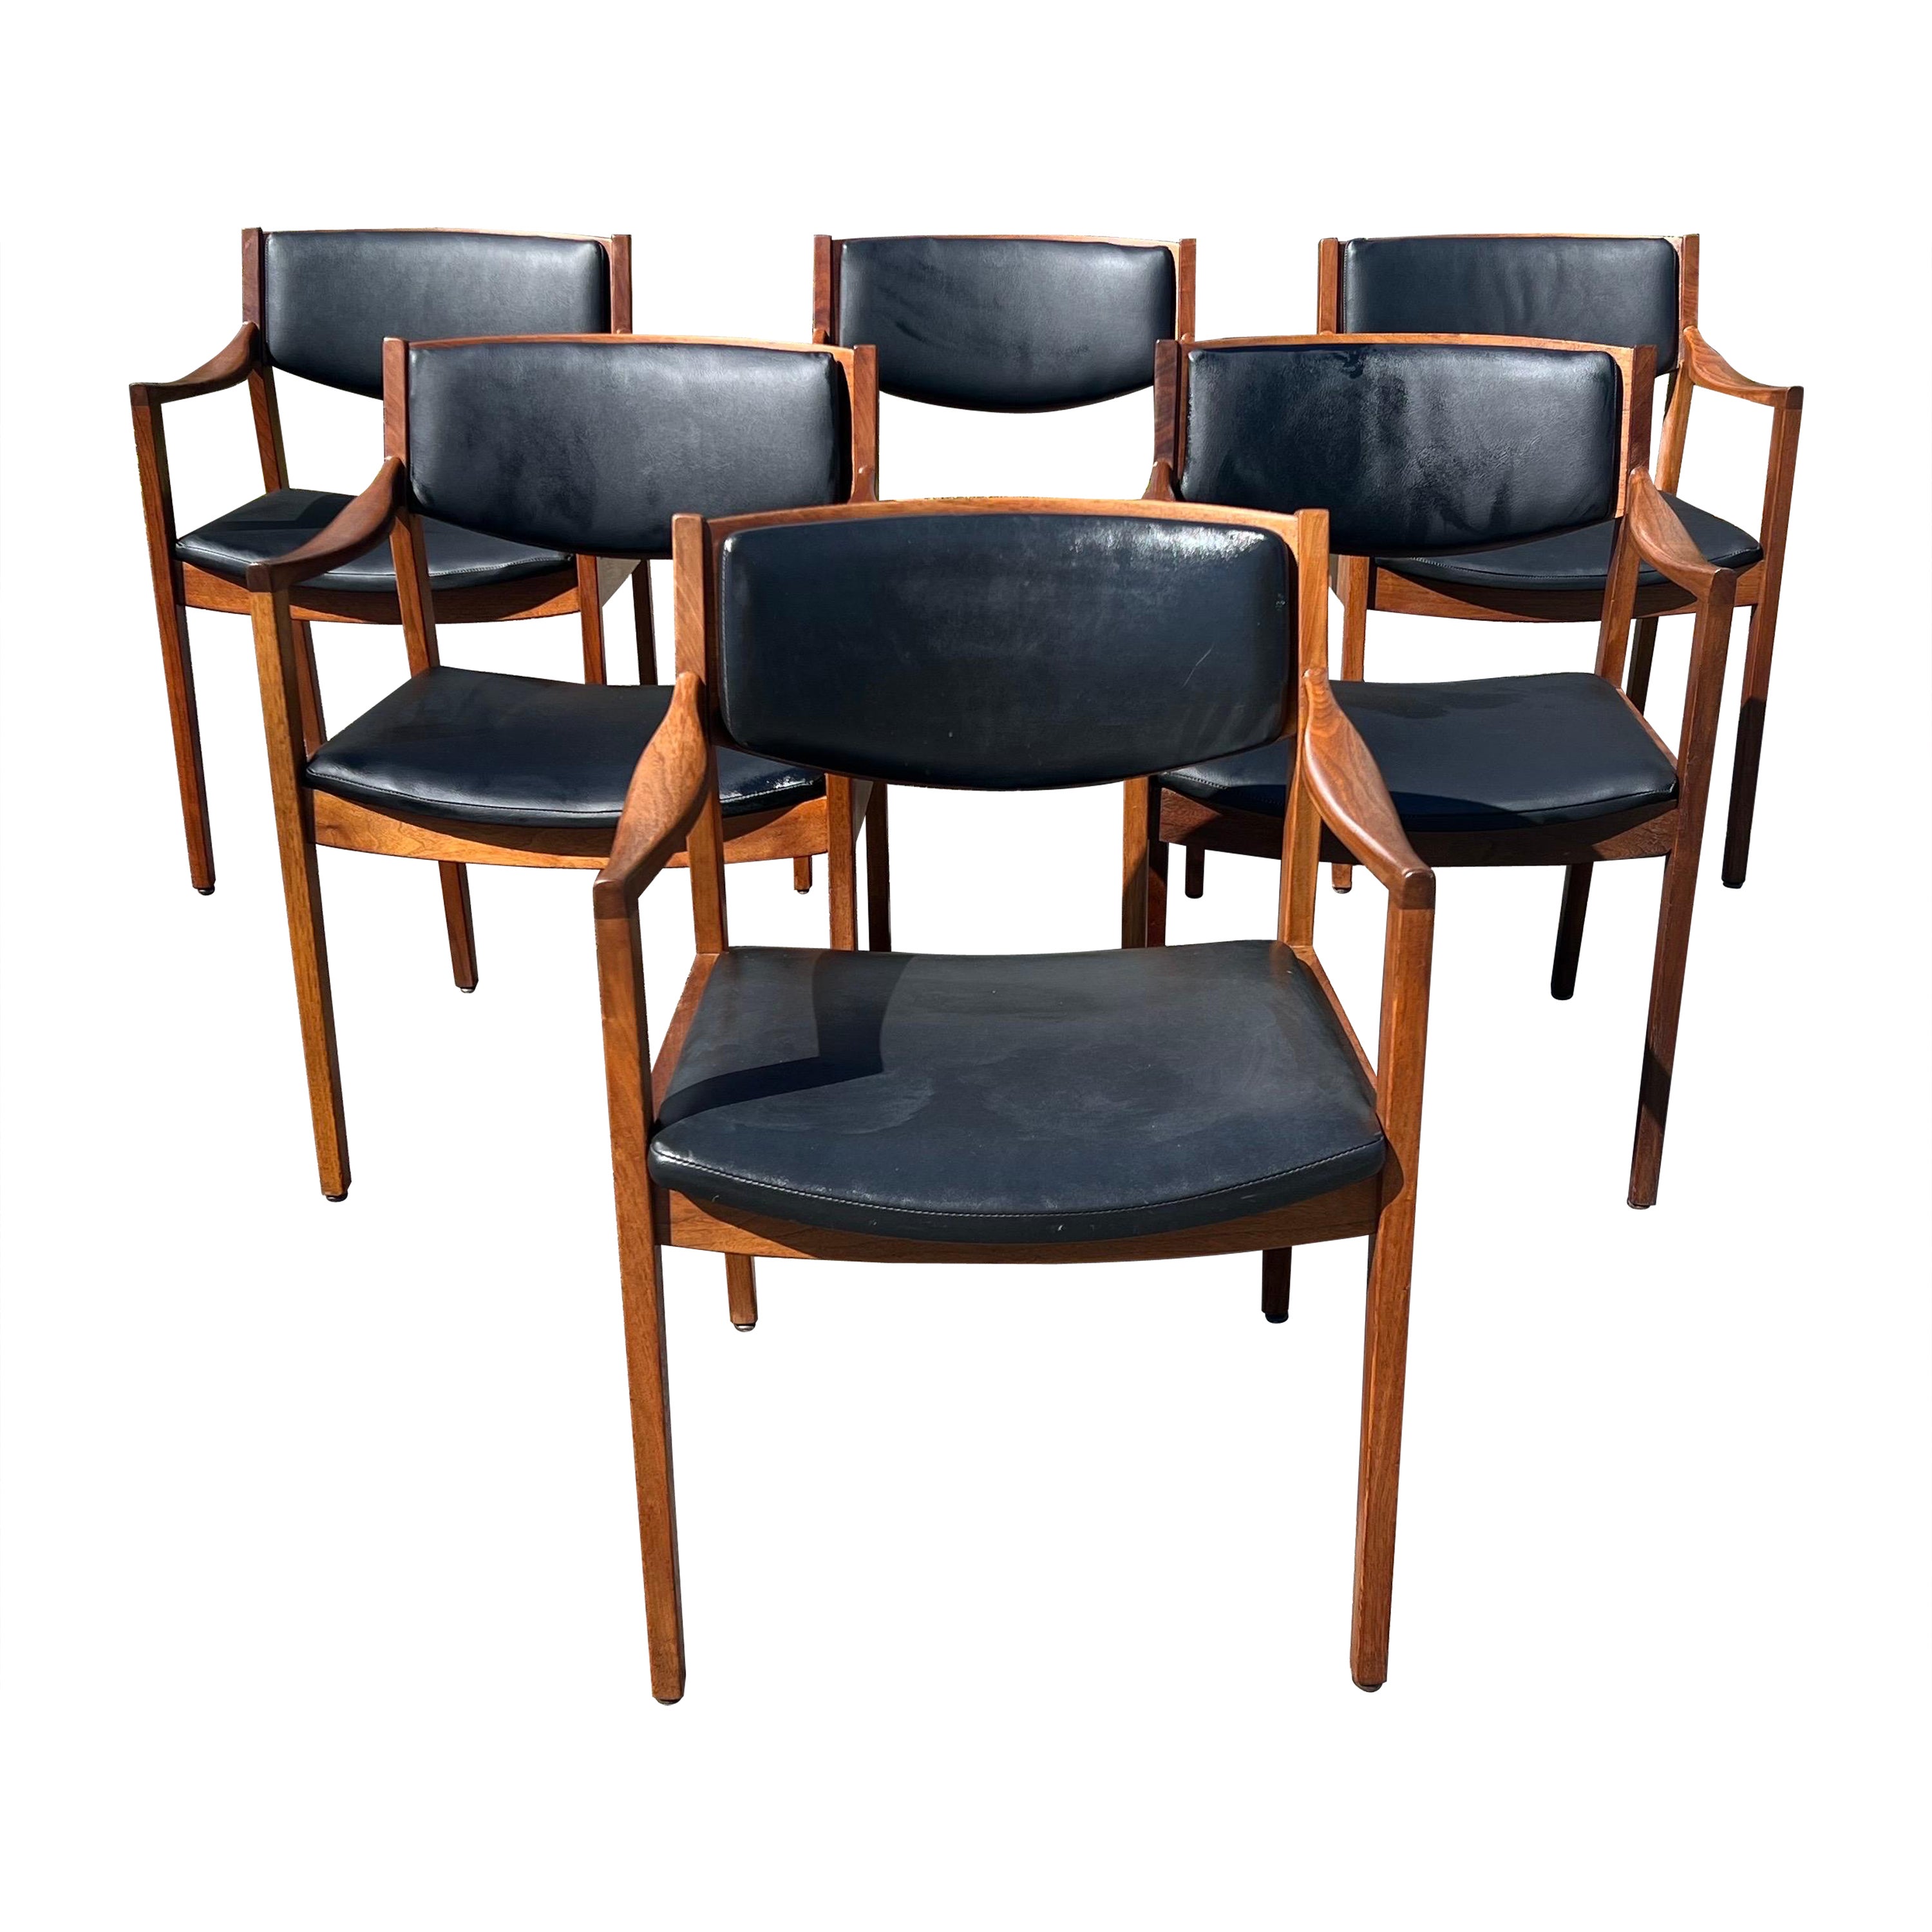 1970s Mid-Century Modern Gunlocke Arm Chairs - a Set of 6